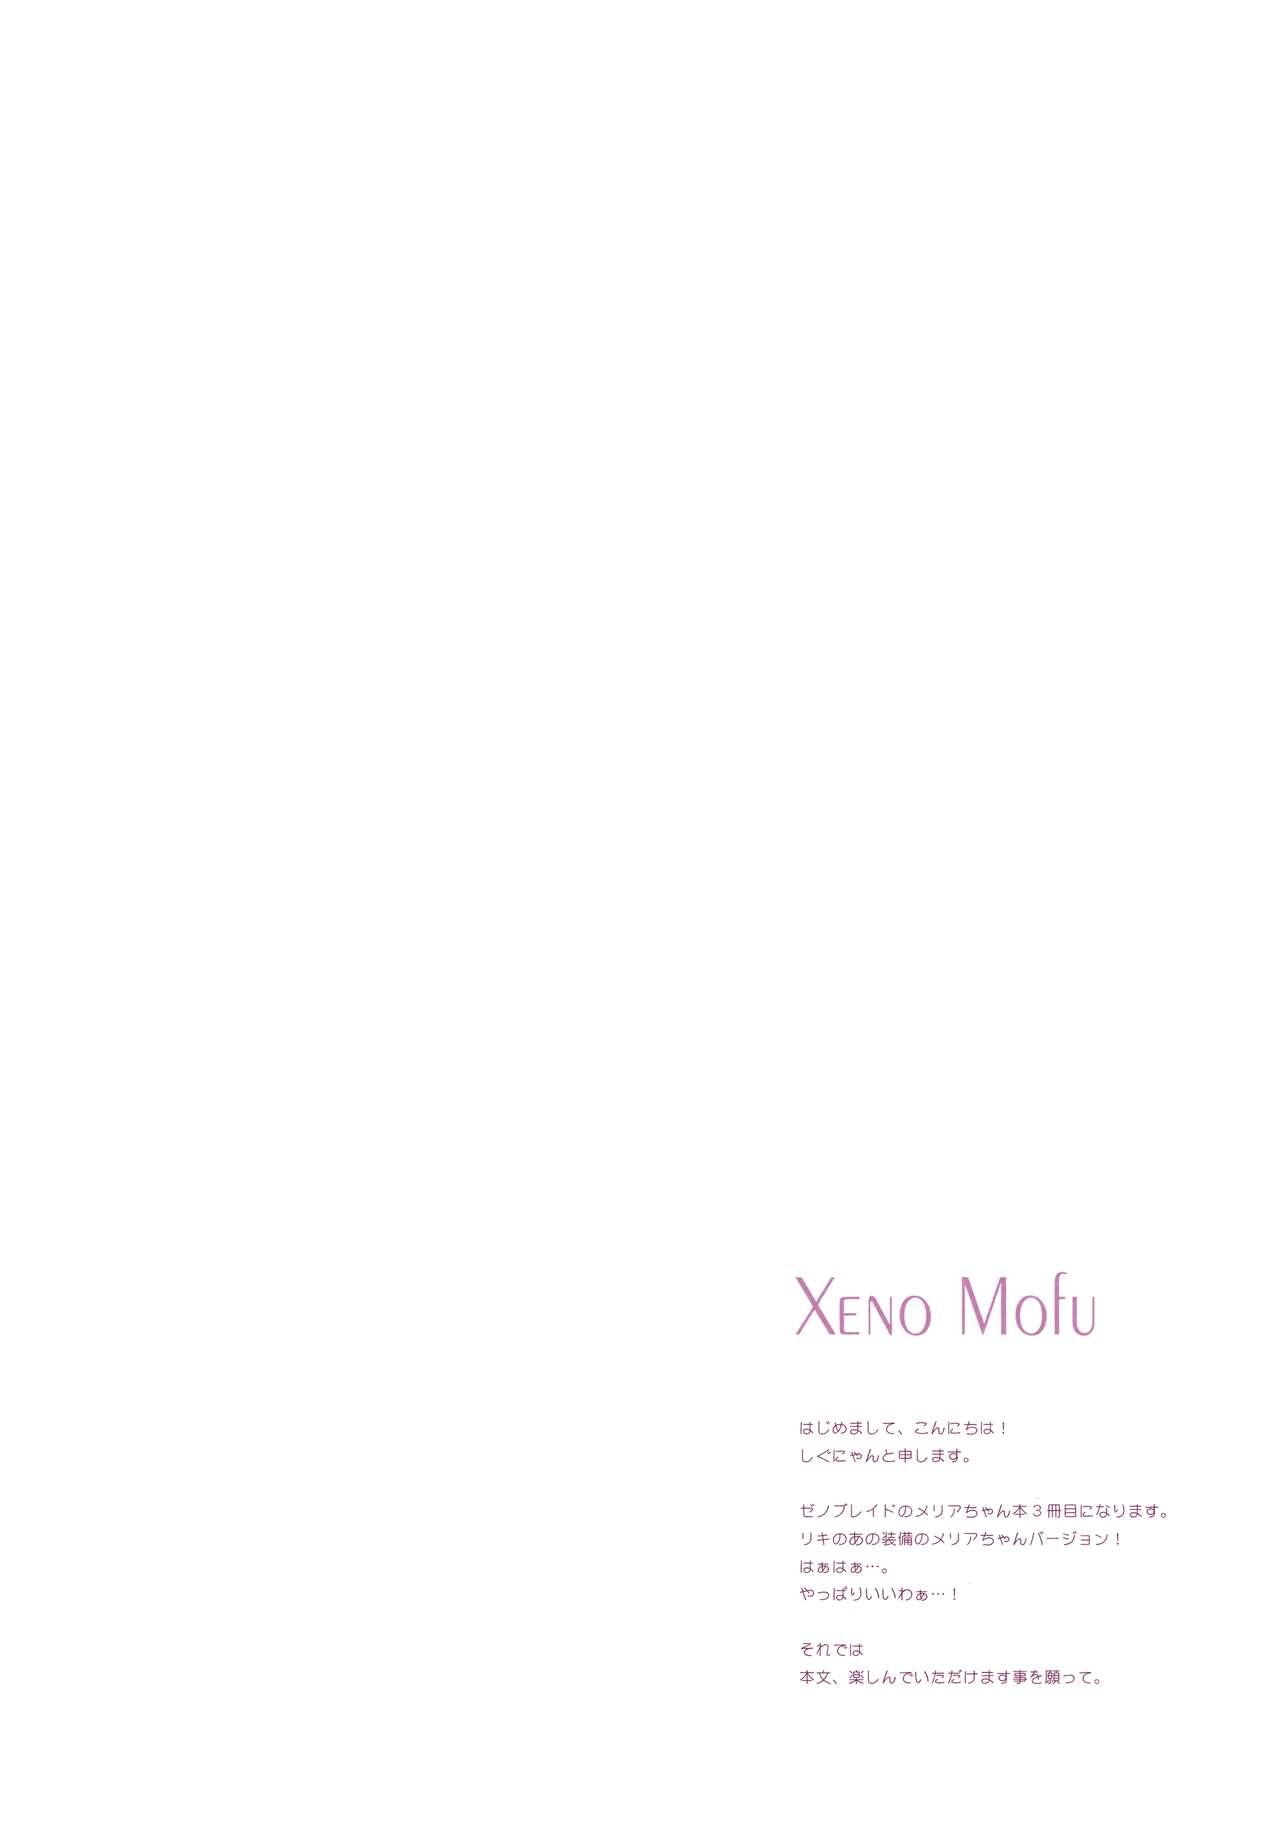 Pool Xeno Mofu - Xenoblade Passivo - Page 3